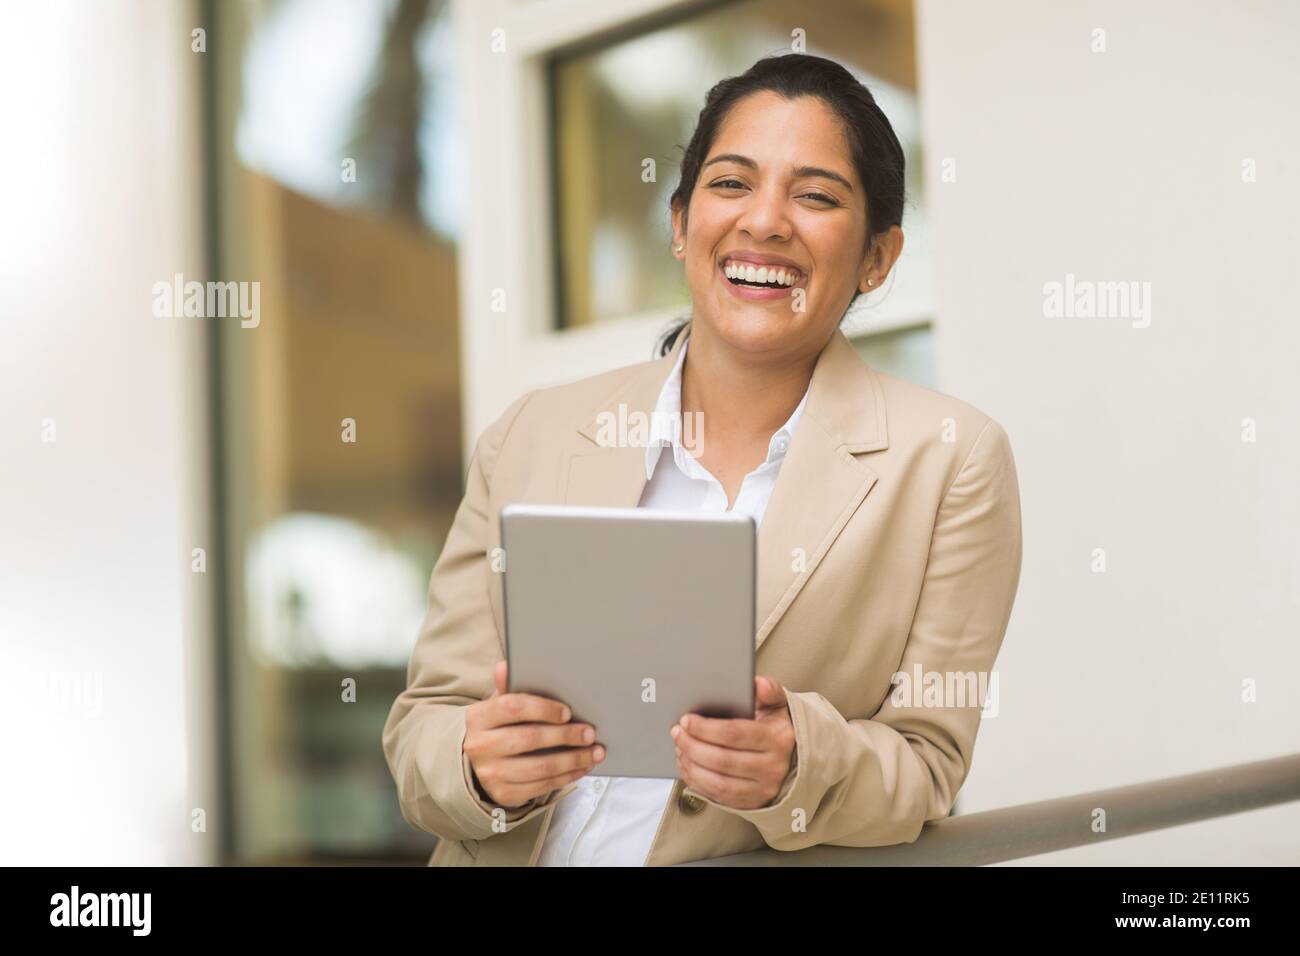 Hispanic business woman smiling outside stock photo Stock Photo